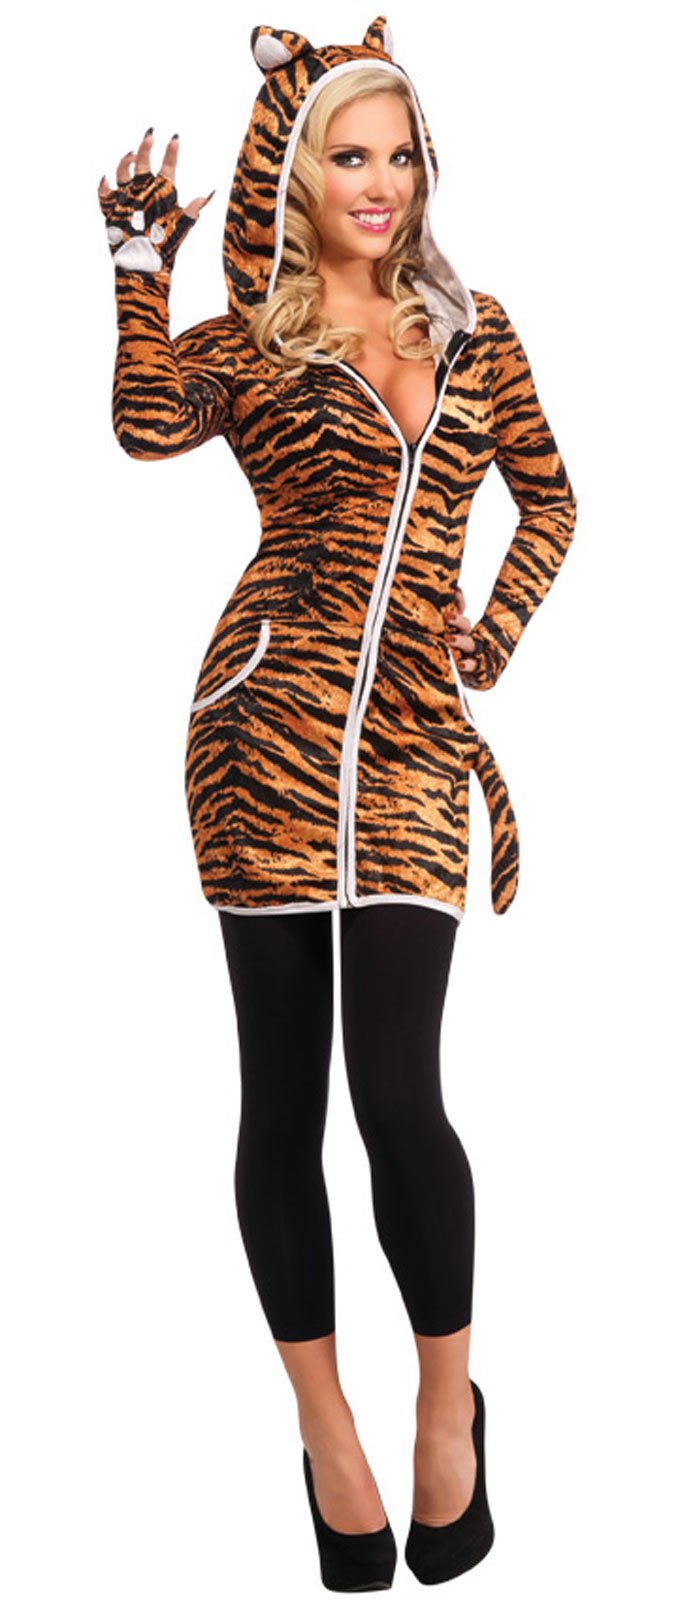 Urban Tiger Adult Costume